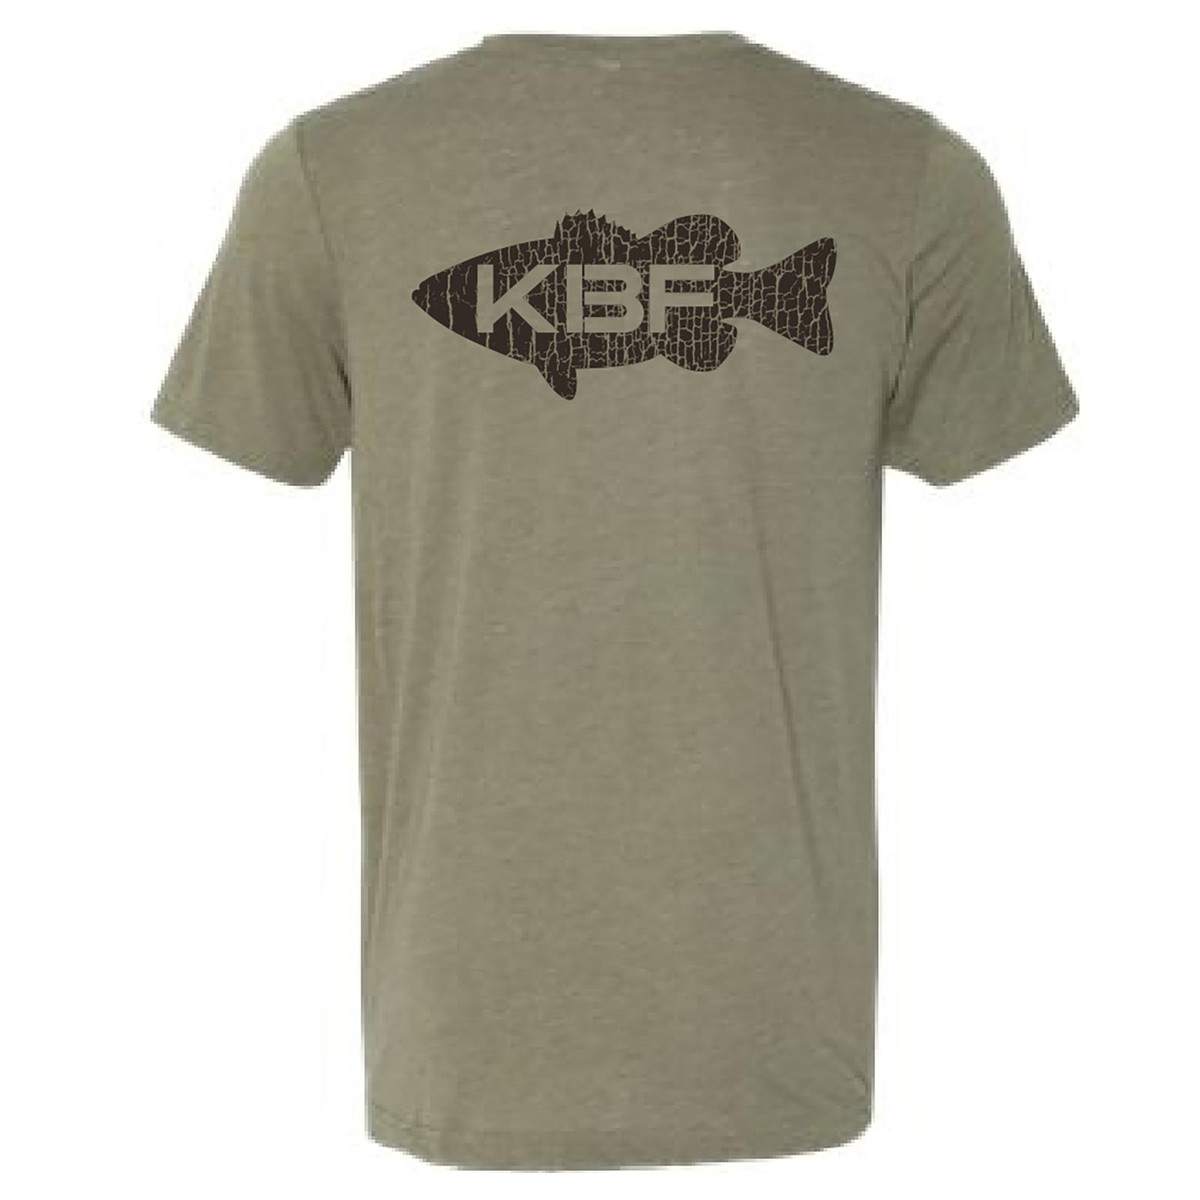 Kayak Bass Fishing KBF Men's Classic Short Sleeve T-Shirt